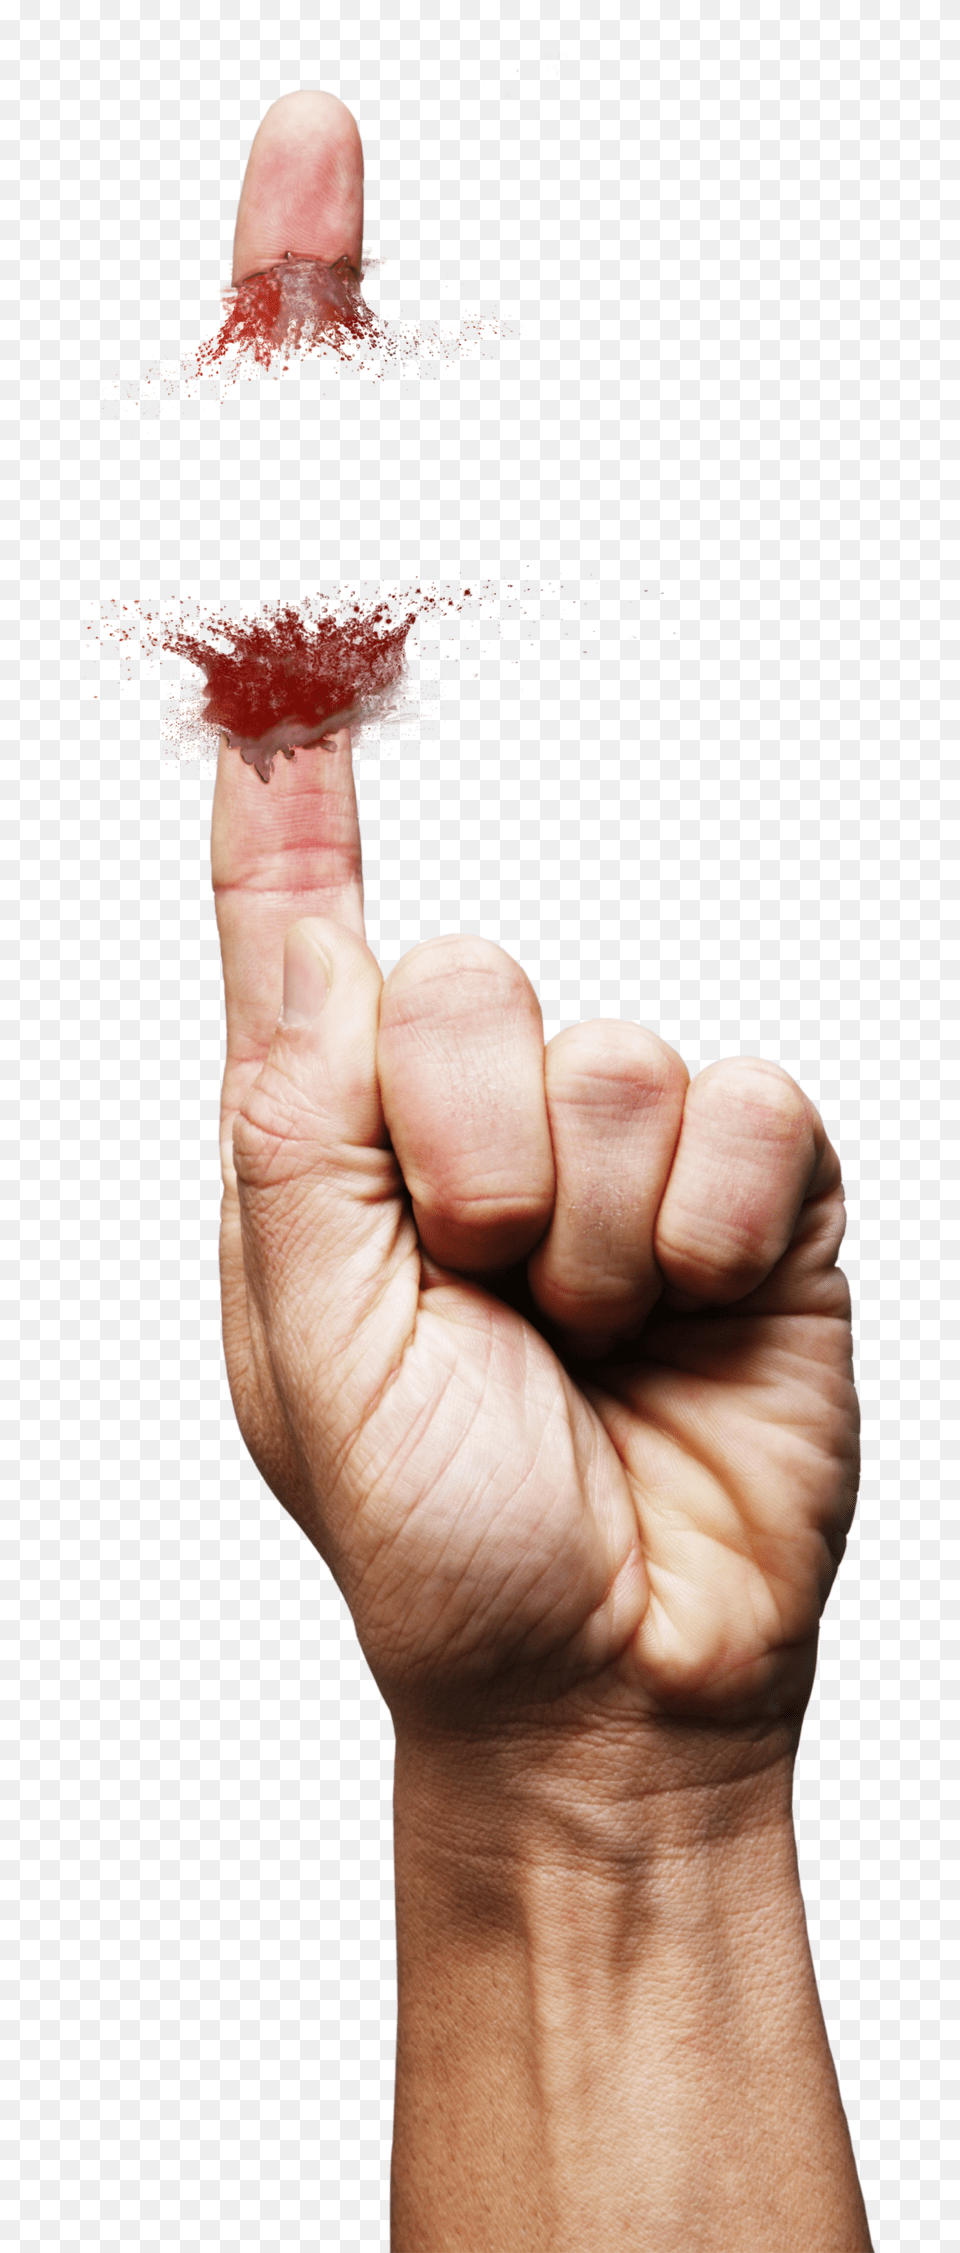 Ftestickers Hand Finger Blood Handgun Gun Distaff Thistles, Body Part, Person, Wrist, Baby Png Image